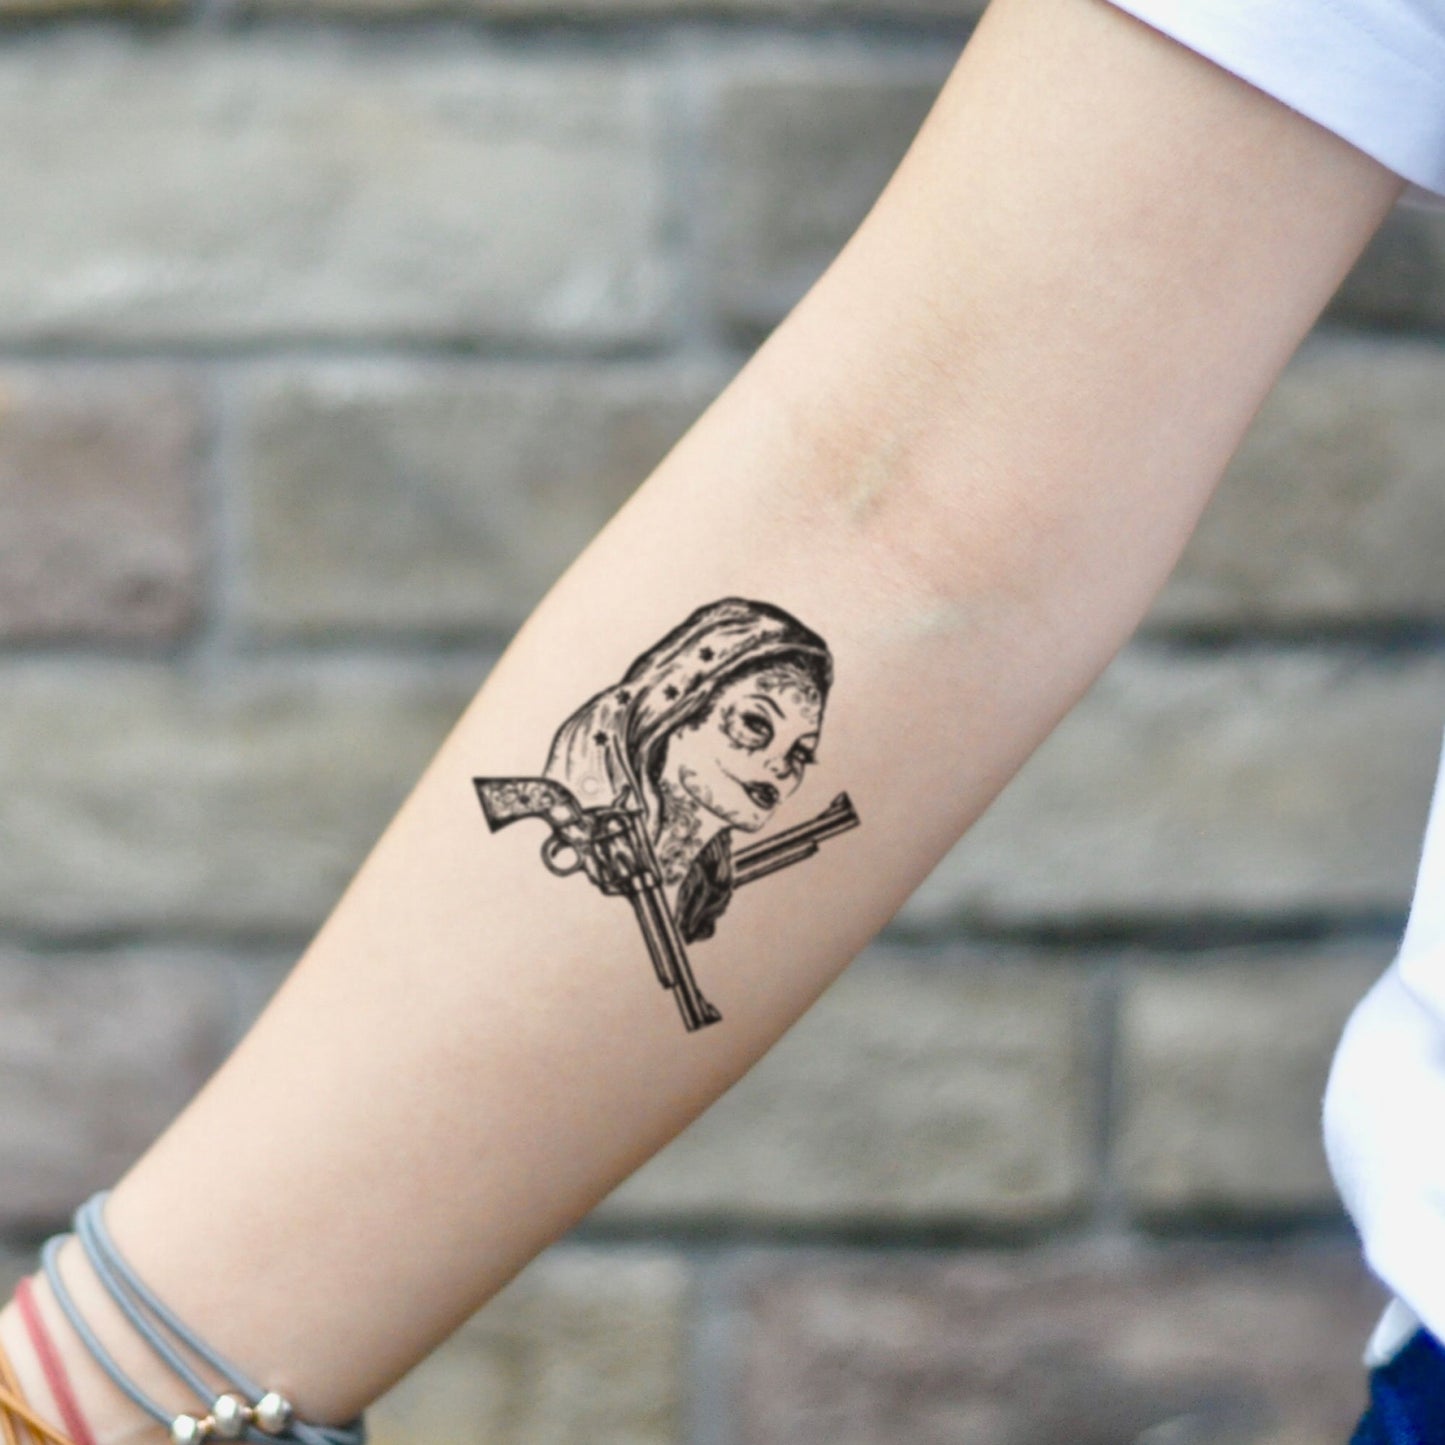 fake small girl with gun chicano gangster illustrative temporary tattoo sticker design idea on inner arm